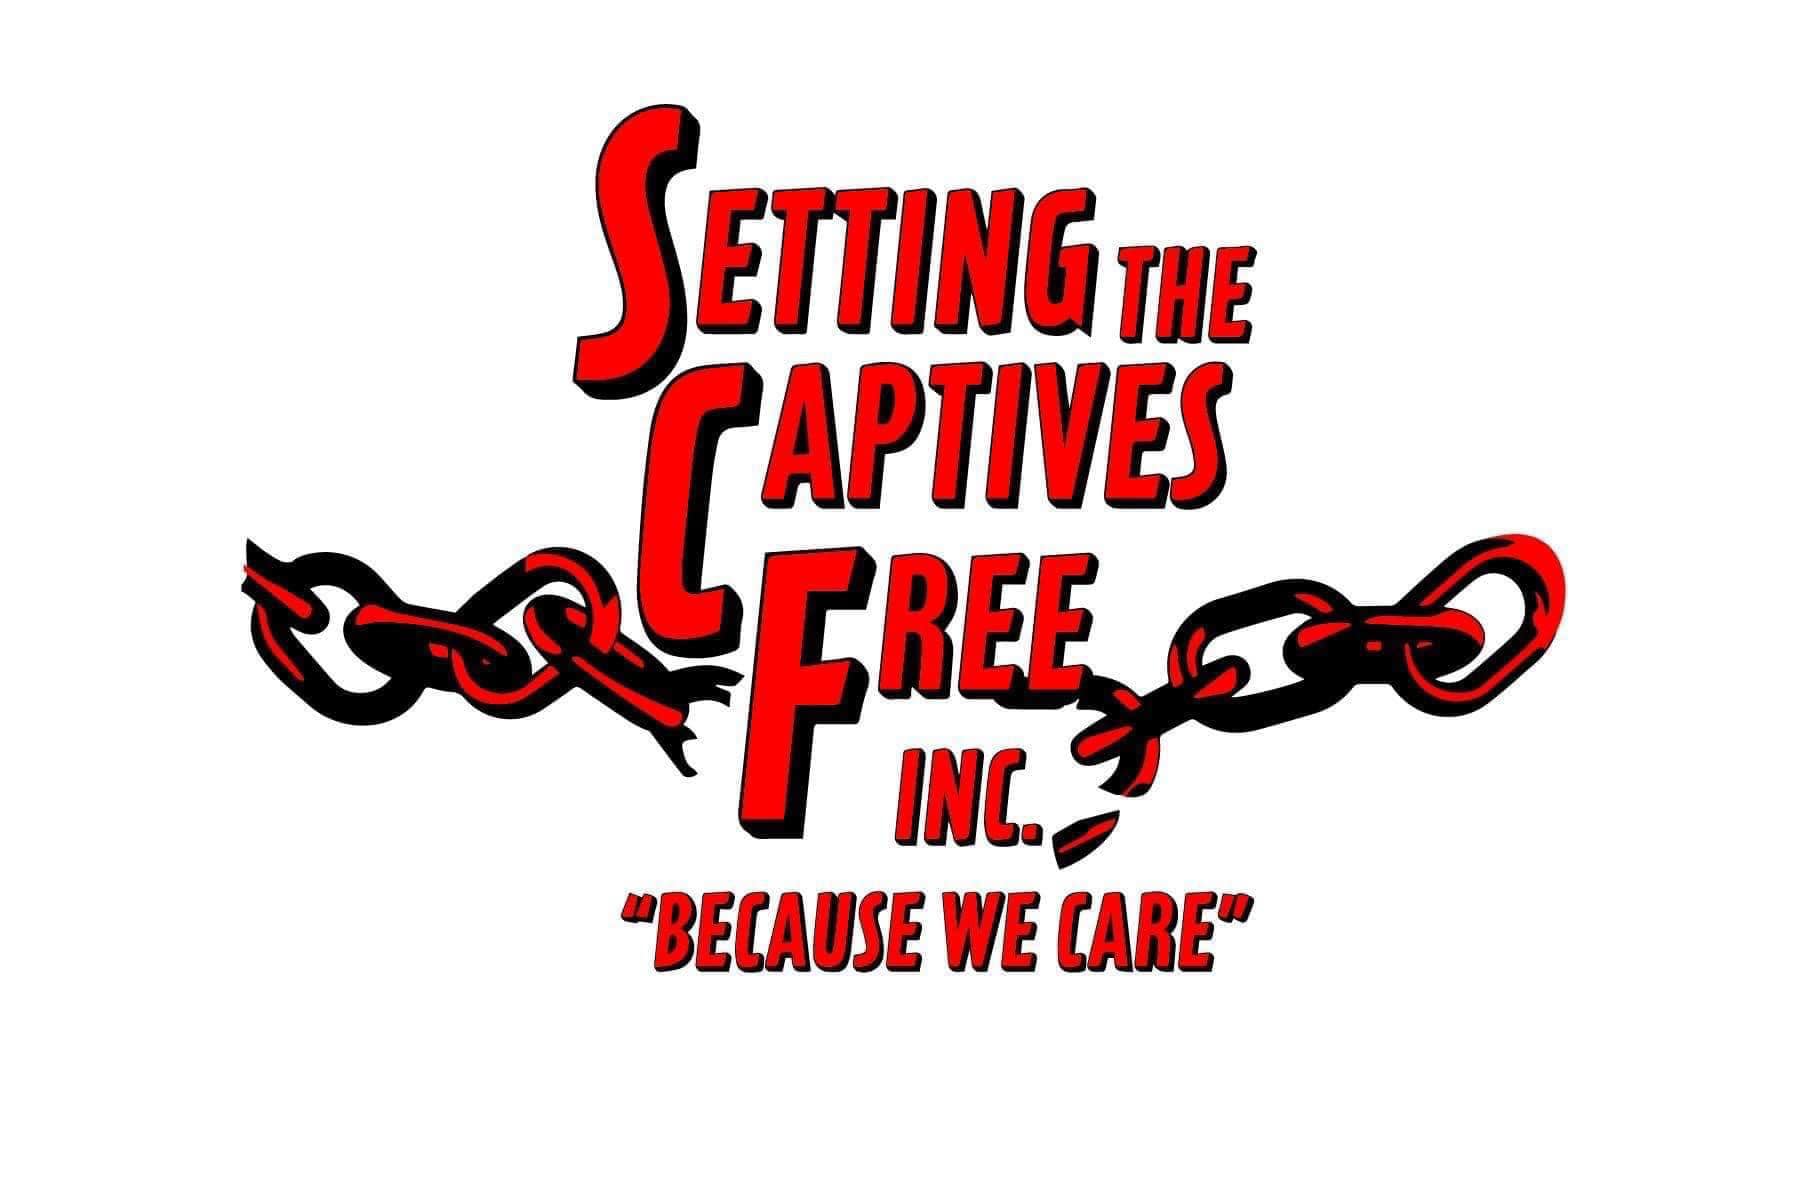 Setting the captives free